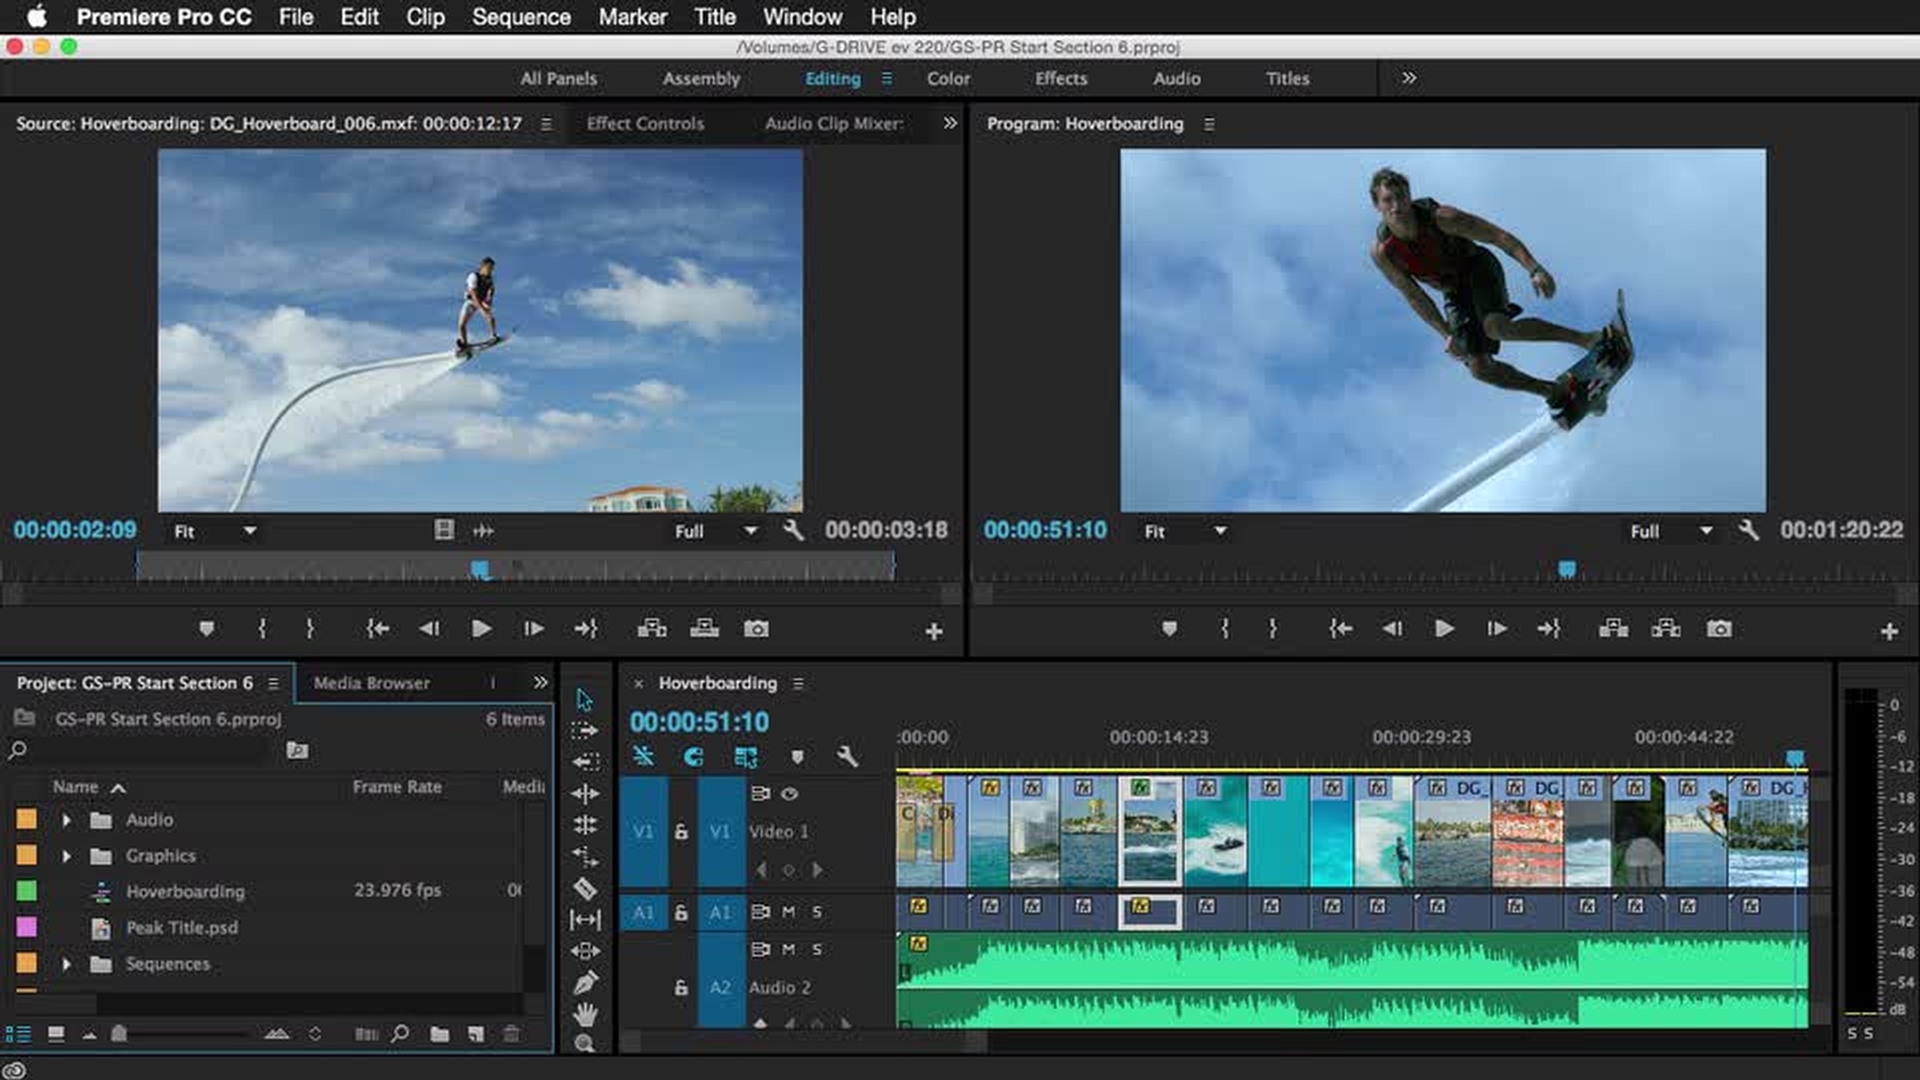 5 Essential MEME Video Editing Techniques! - (Adobe Premiere Pro, Photoshop  Tutorial How To) 